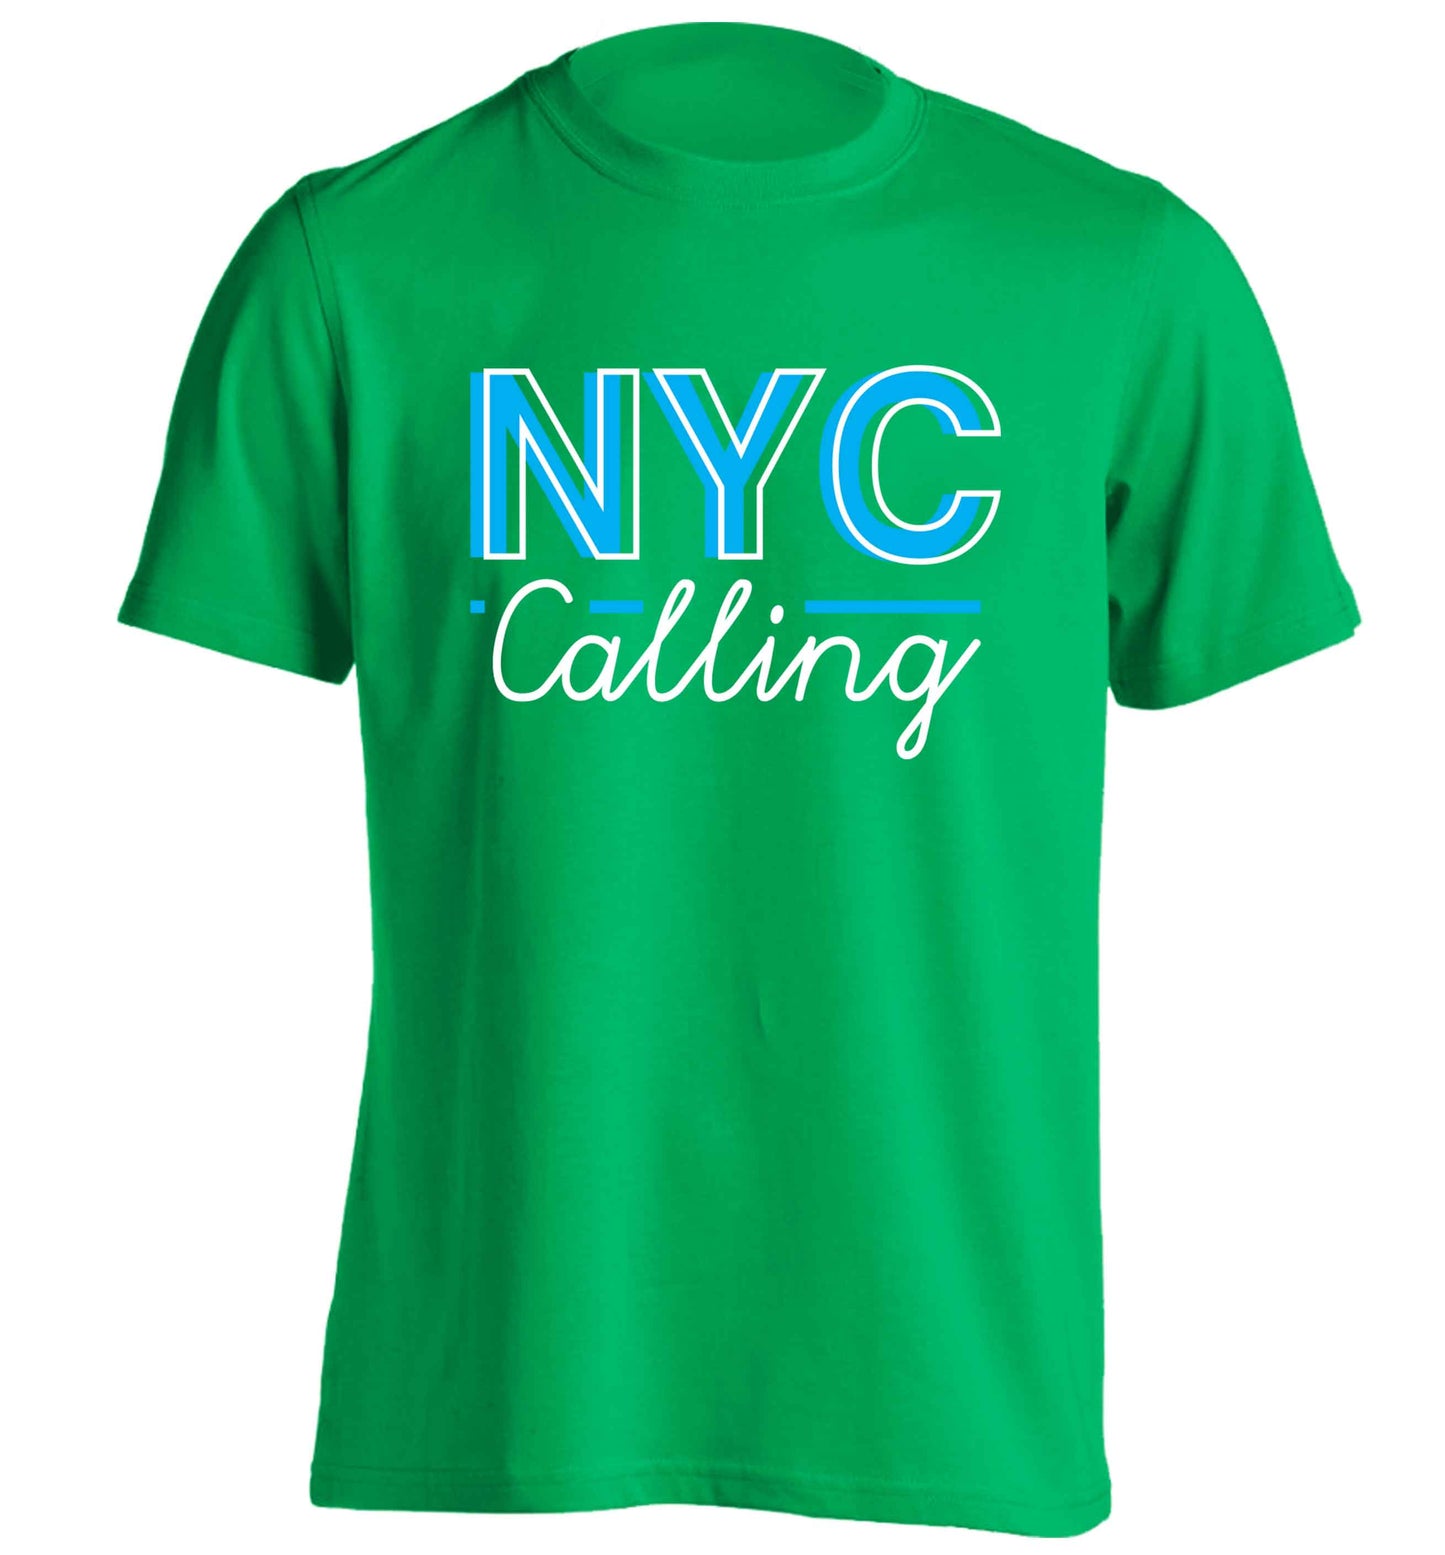 NYC calling adults unisex green Tshirt 2XL